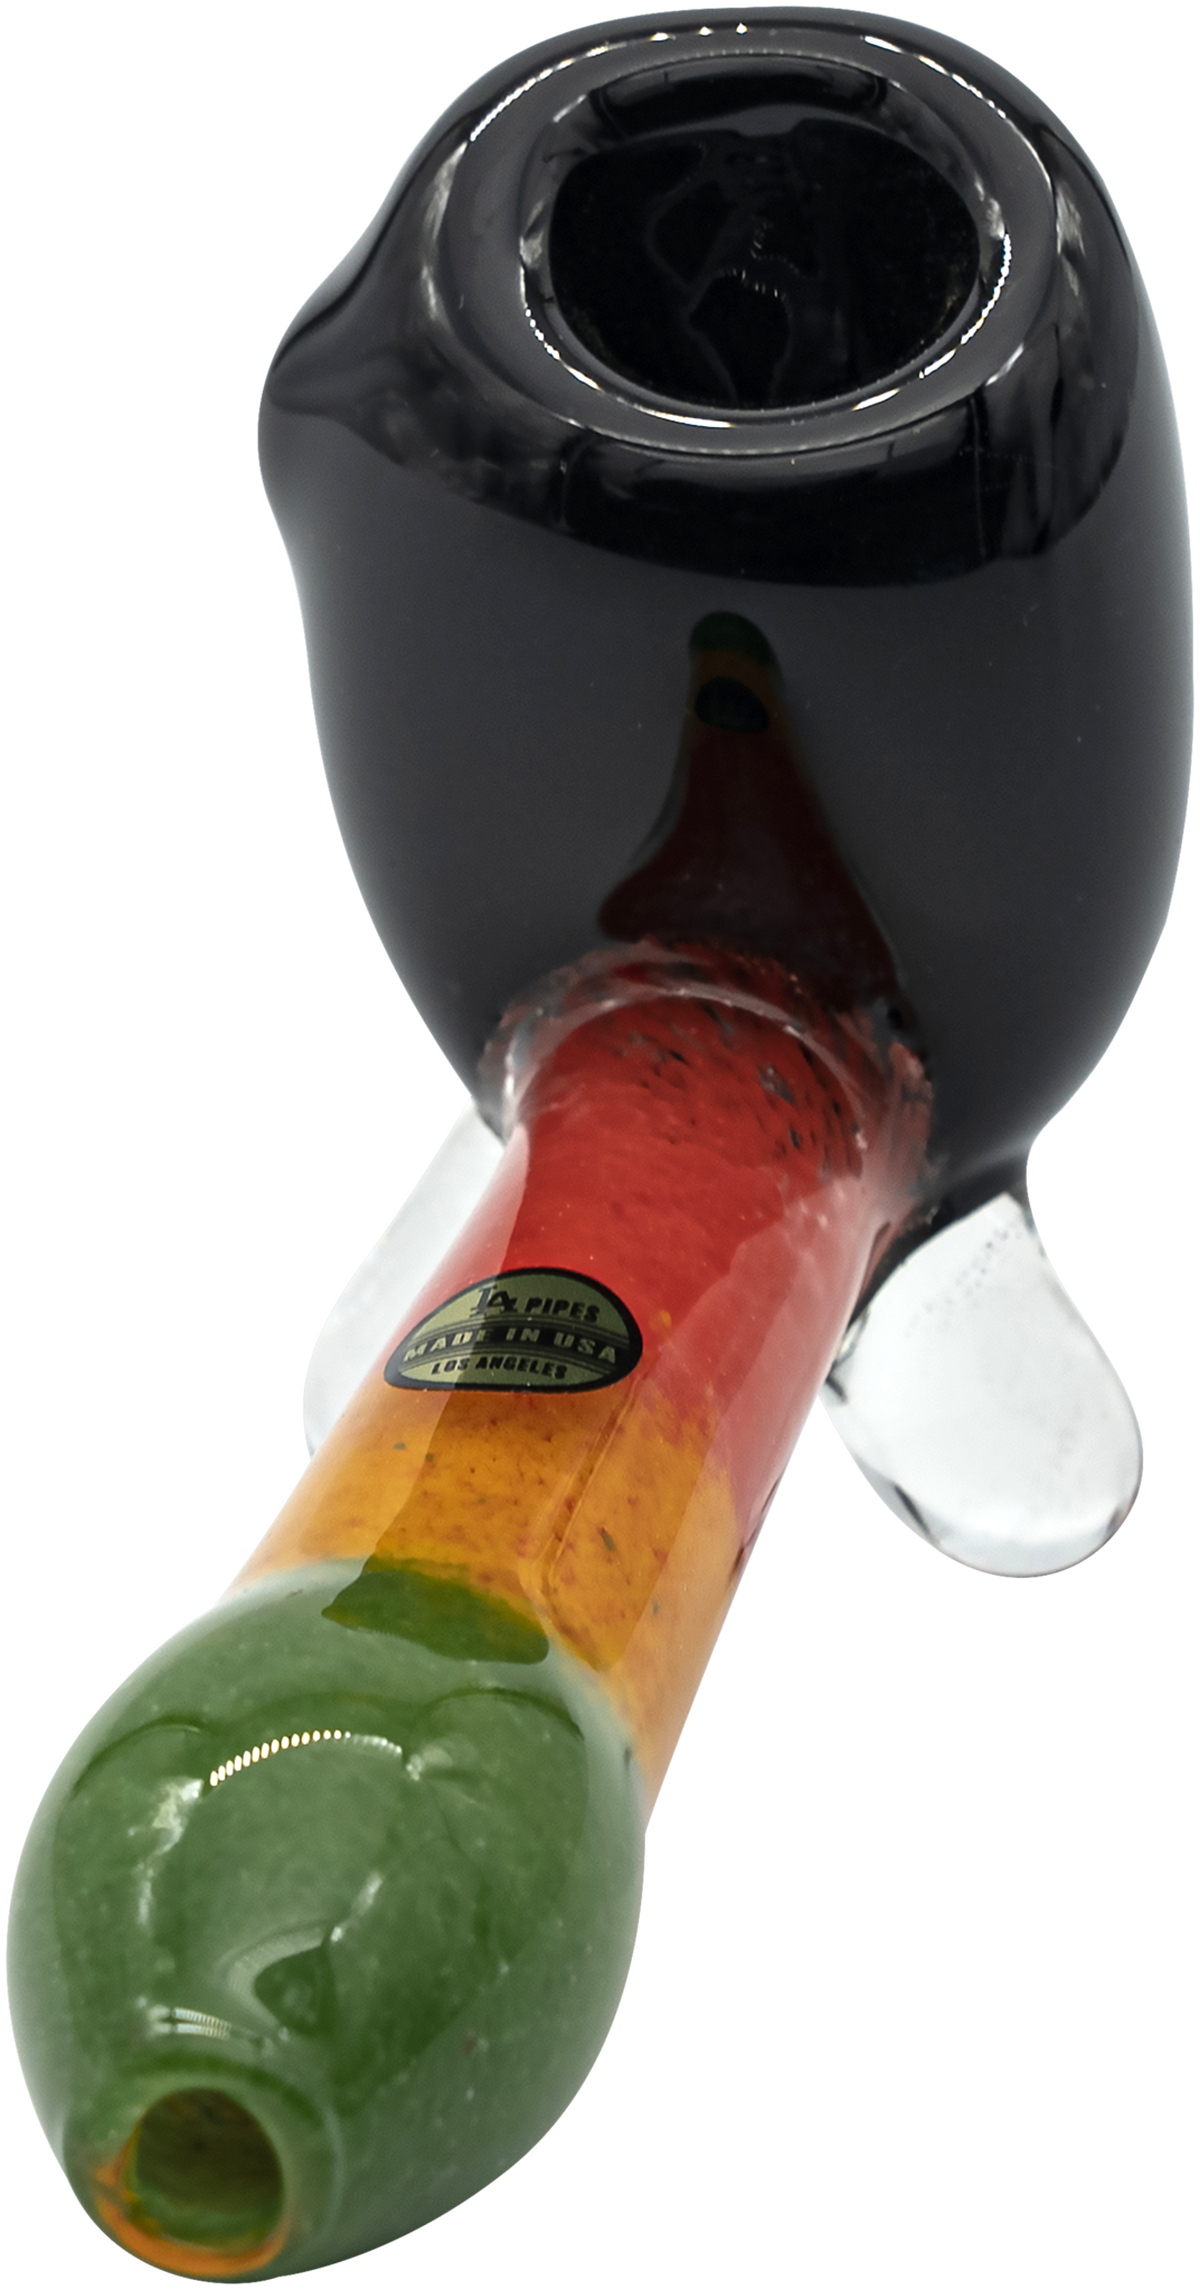 LA Pipes "Sattdown Rasta" Sherlock Glass Pipe with Rasta colors, 4.5" long, side view